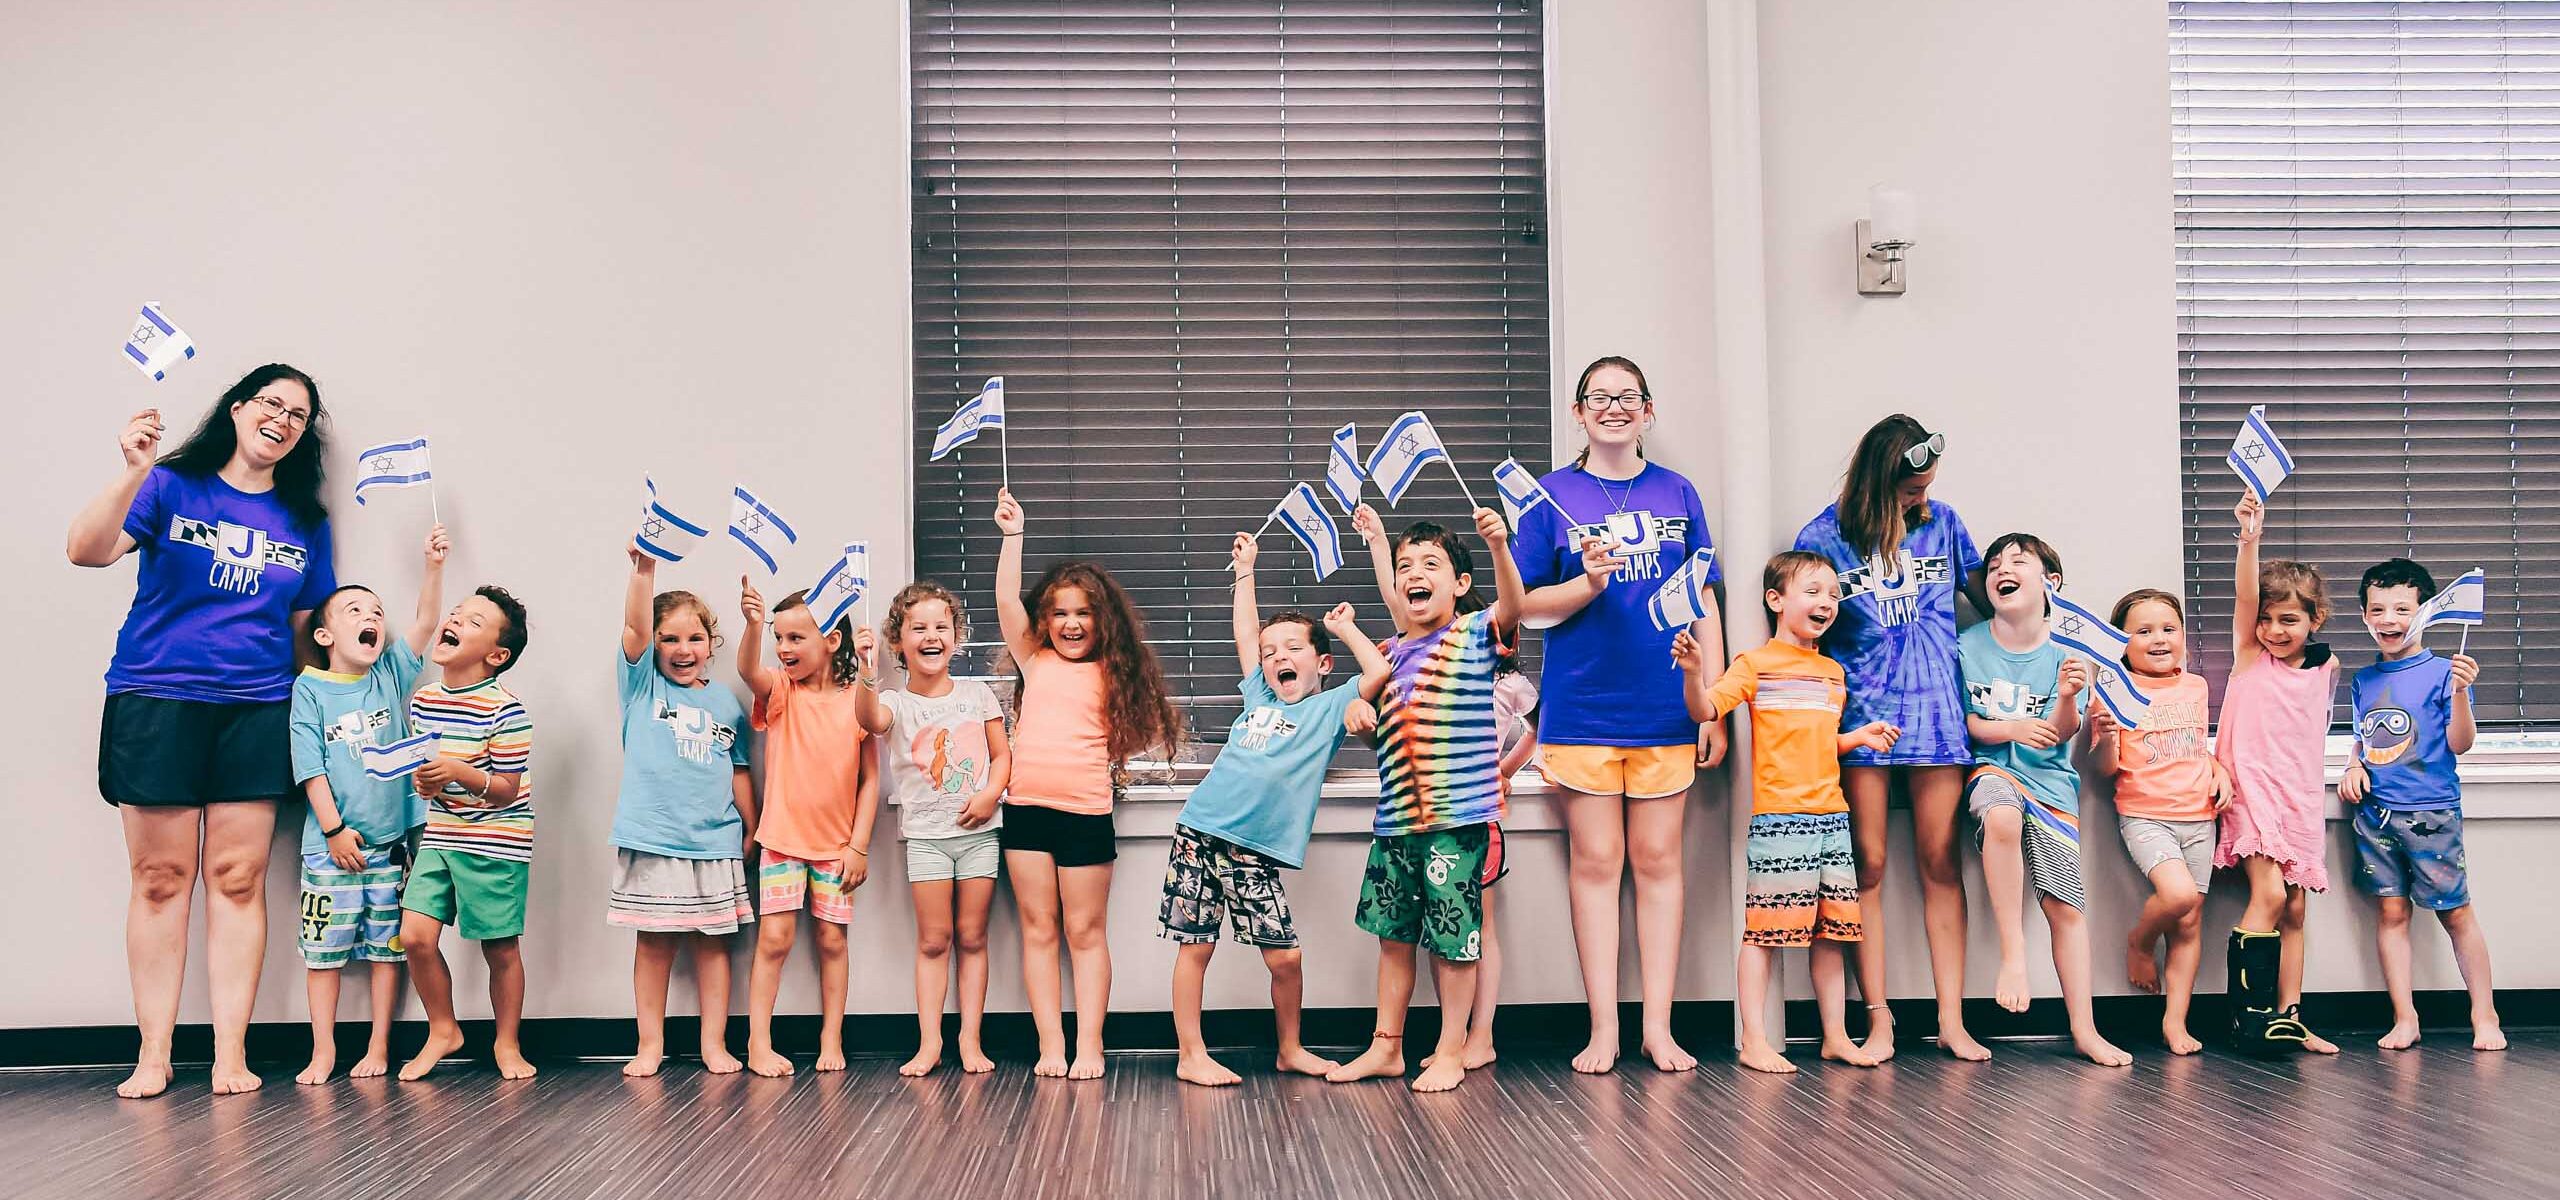 Kids ready to celebrate a Jewish holiday.